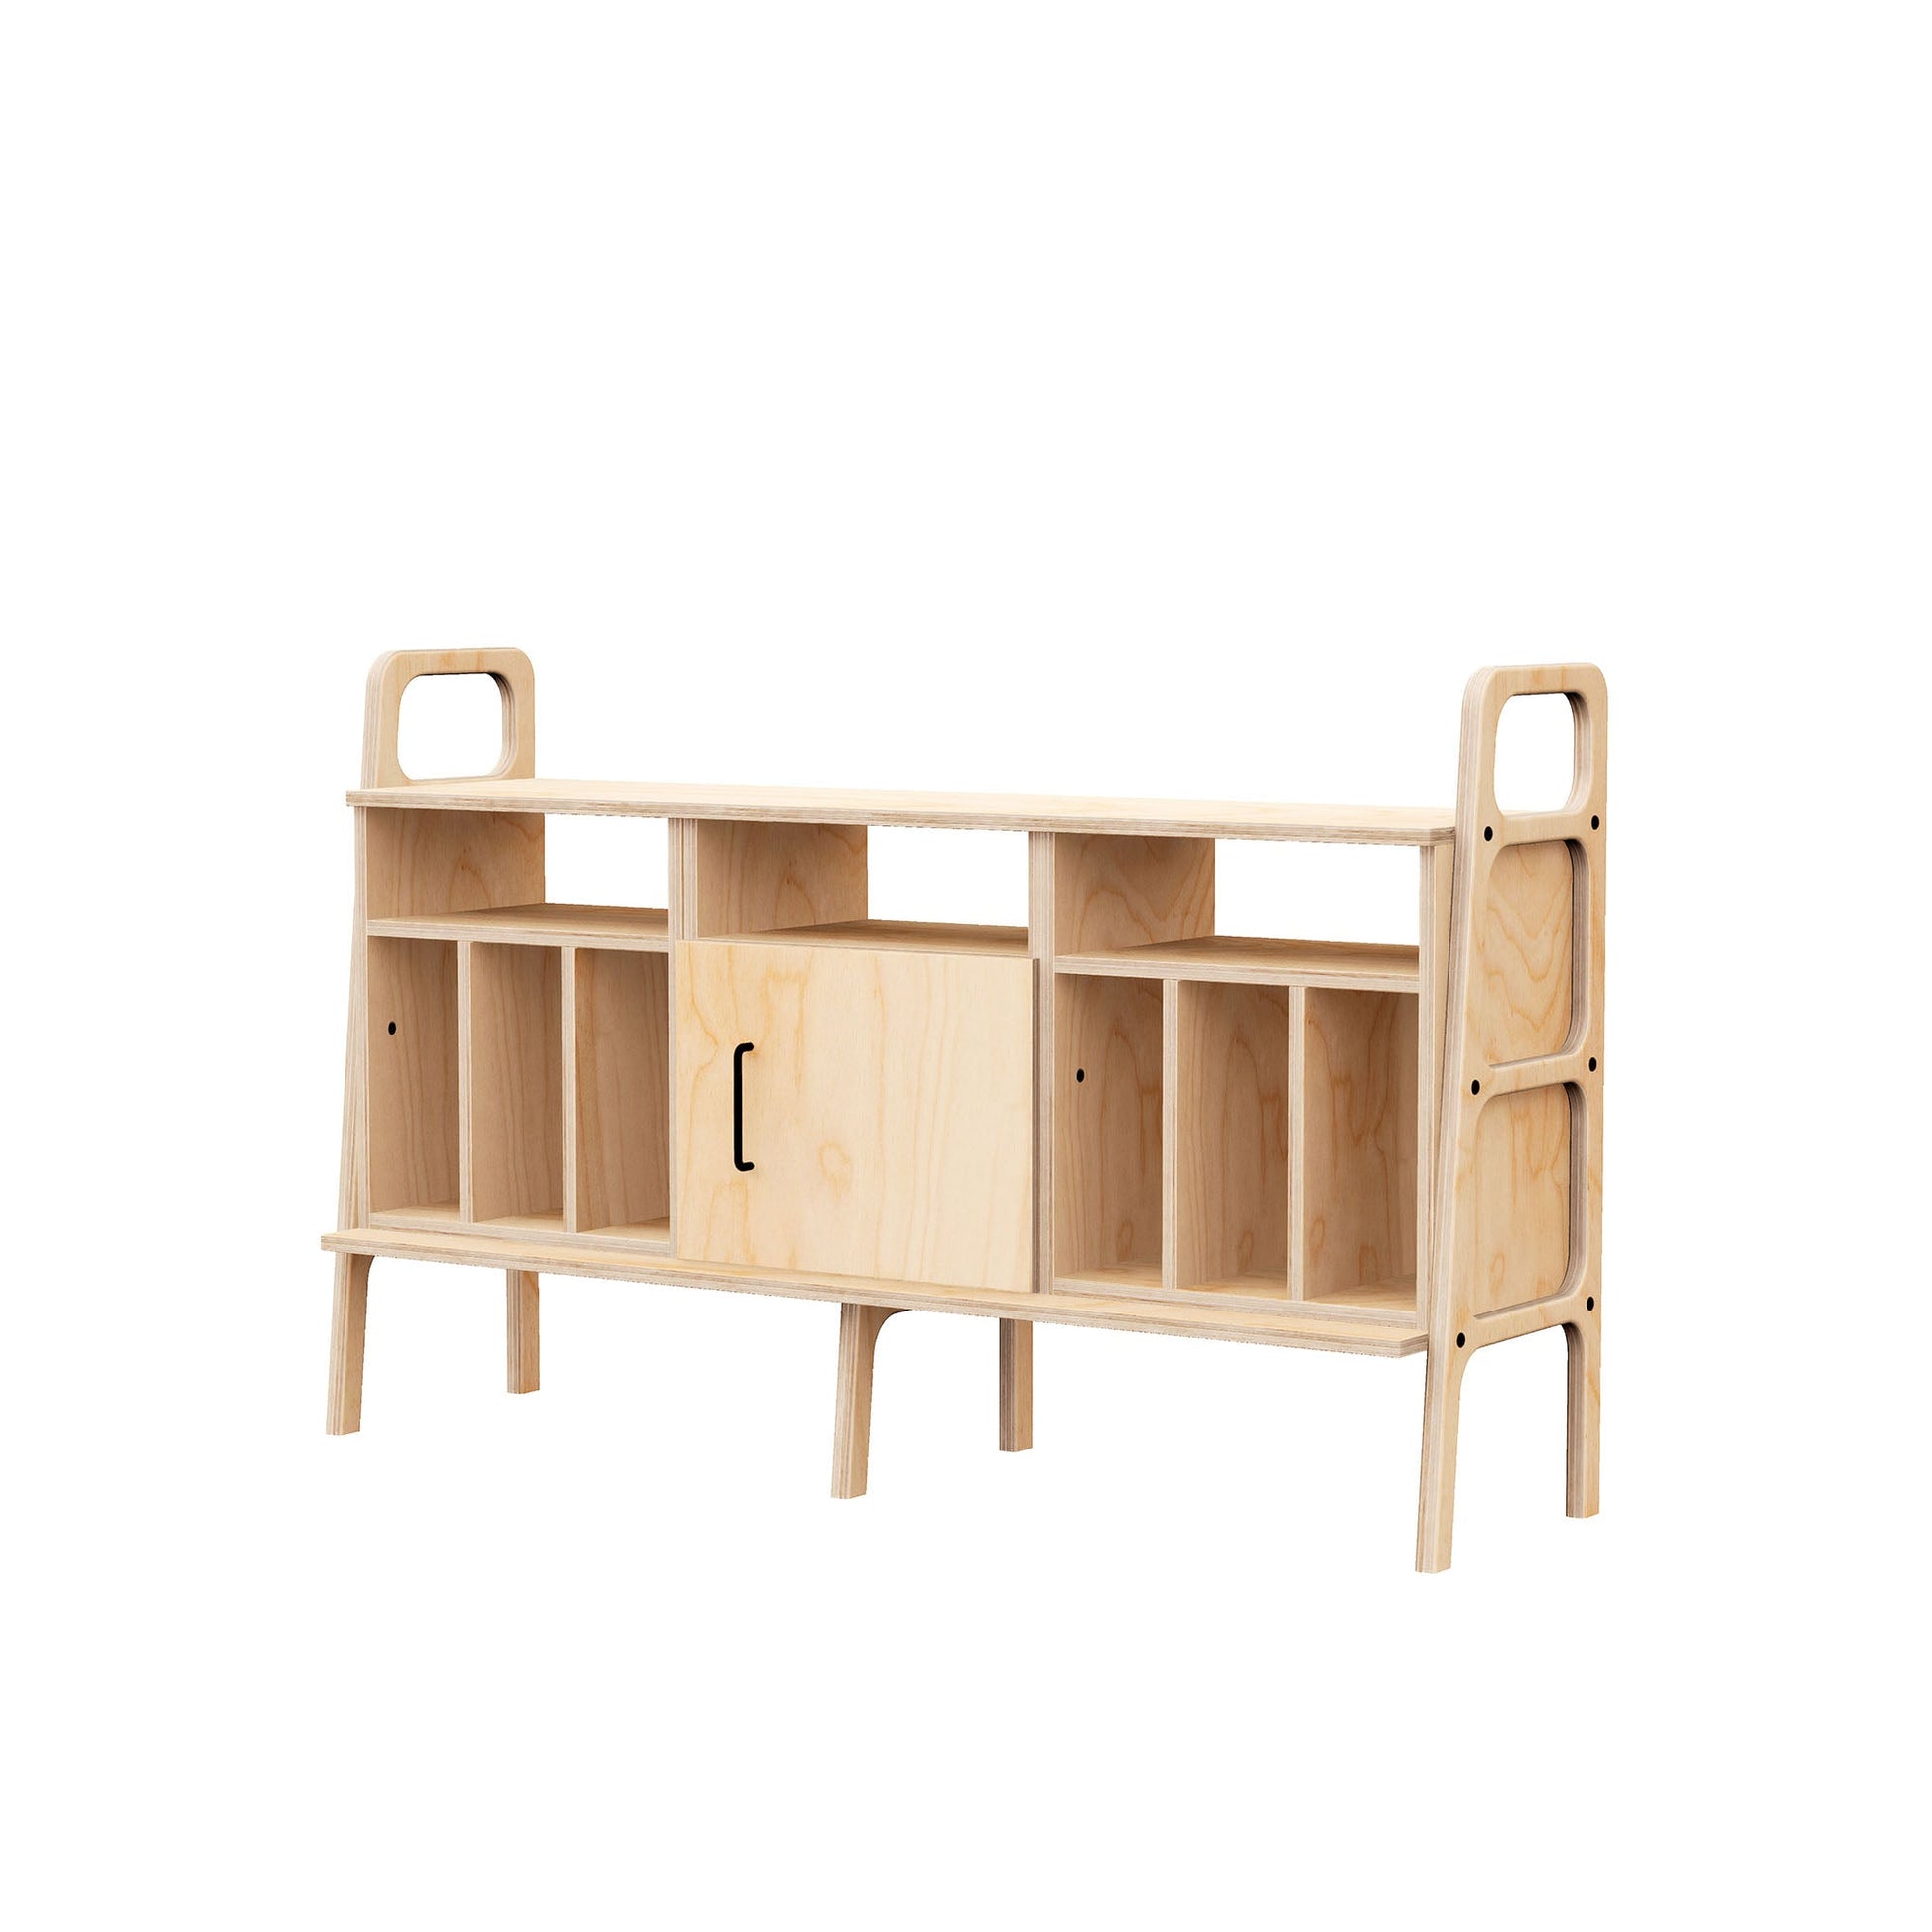 minimalist-sideboard-mid-century-modern-design.jpg